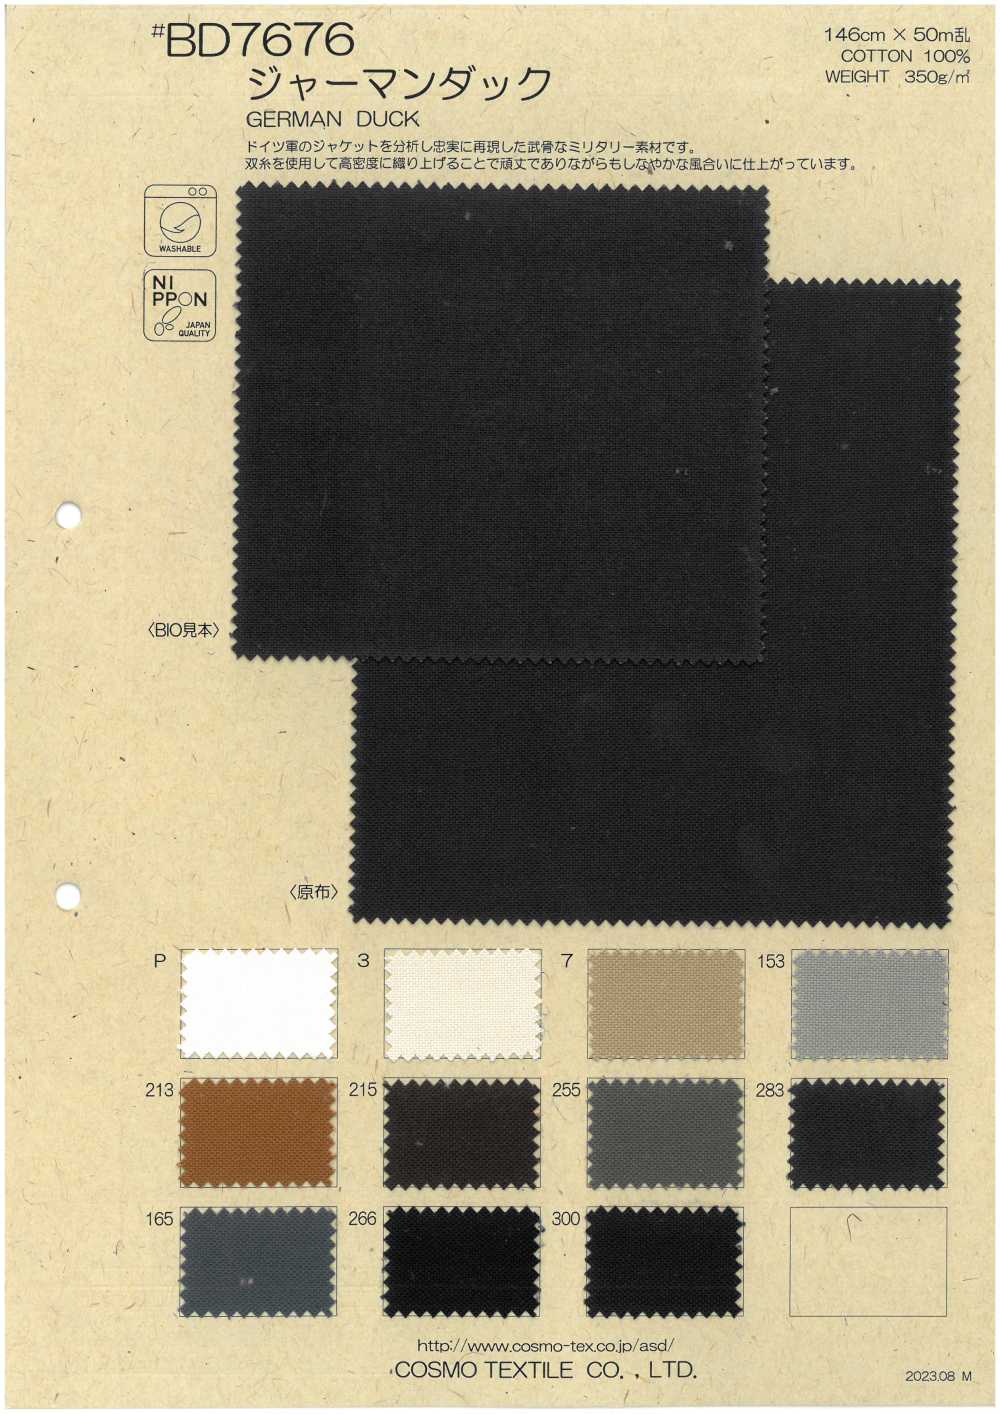 BD7676 German Duck[Textile / Fabric] COSMO TEXTILE